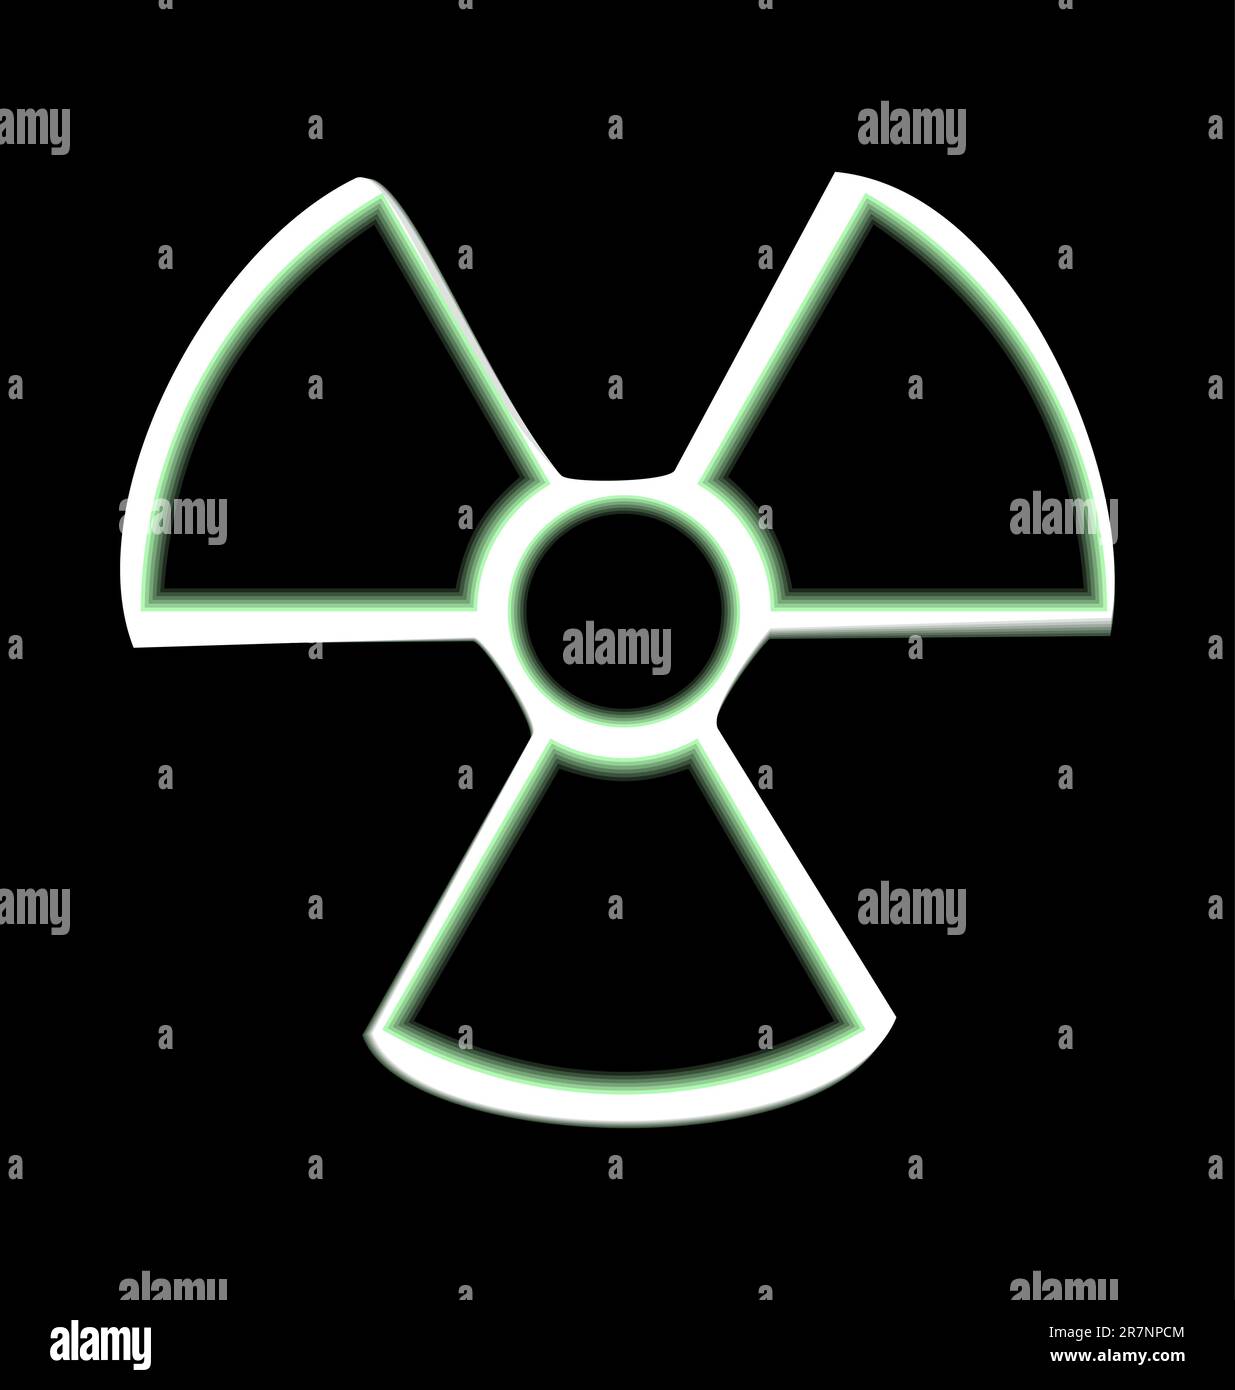 Illustration the warning symbol of radioactive hazard isolated on black background - vector Stock Vector